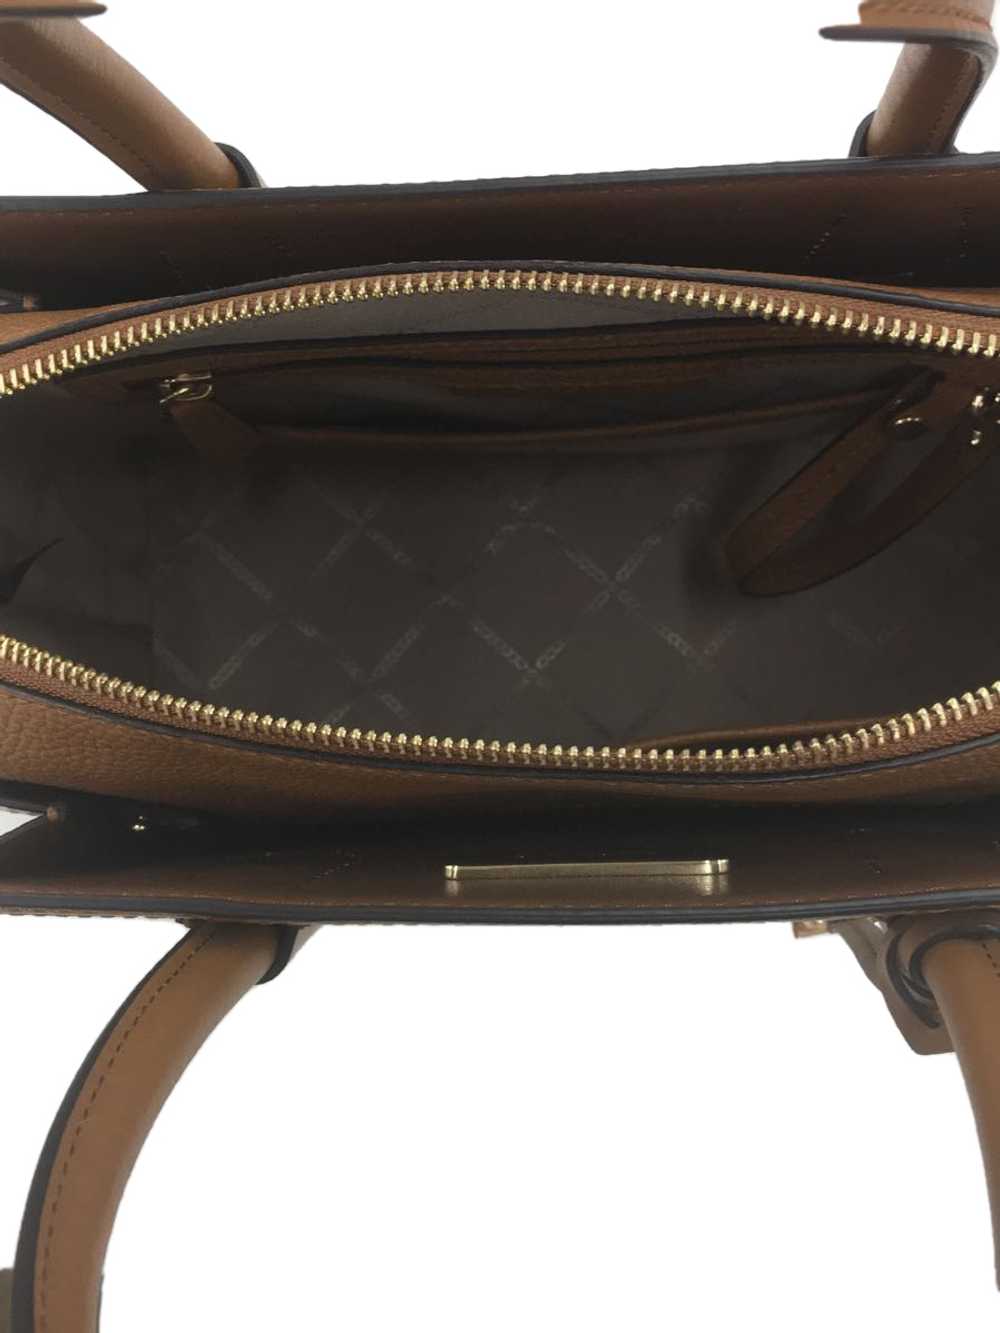 Michael Kors Handbag/Canvas/Brw/Plain Bag - image 6